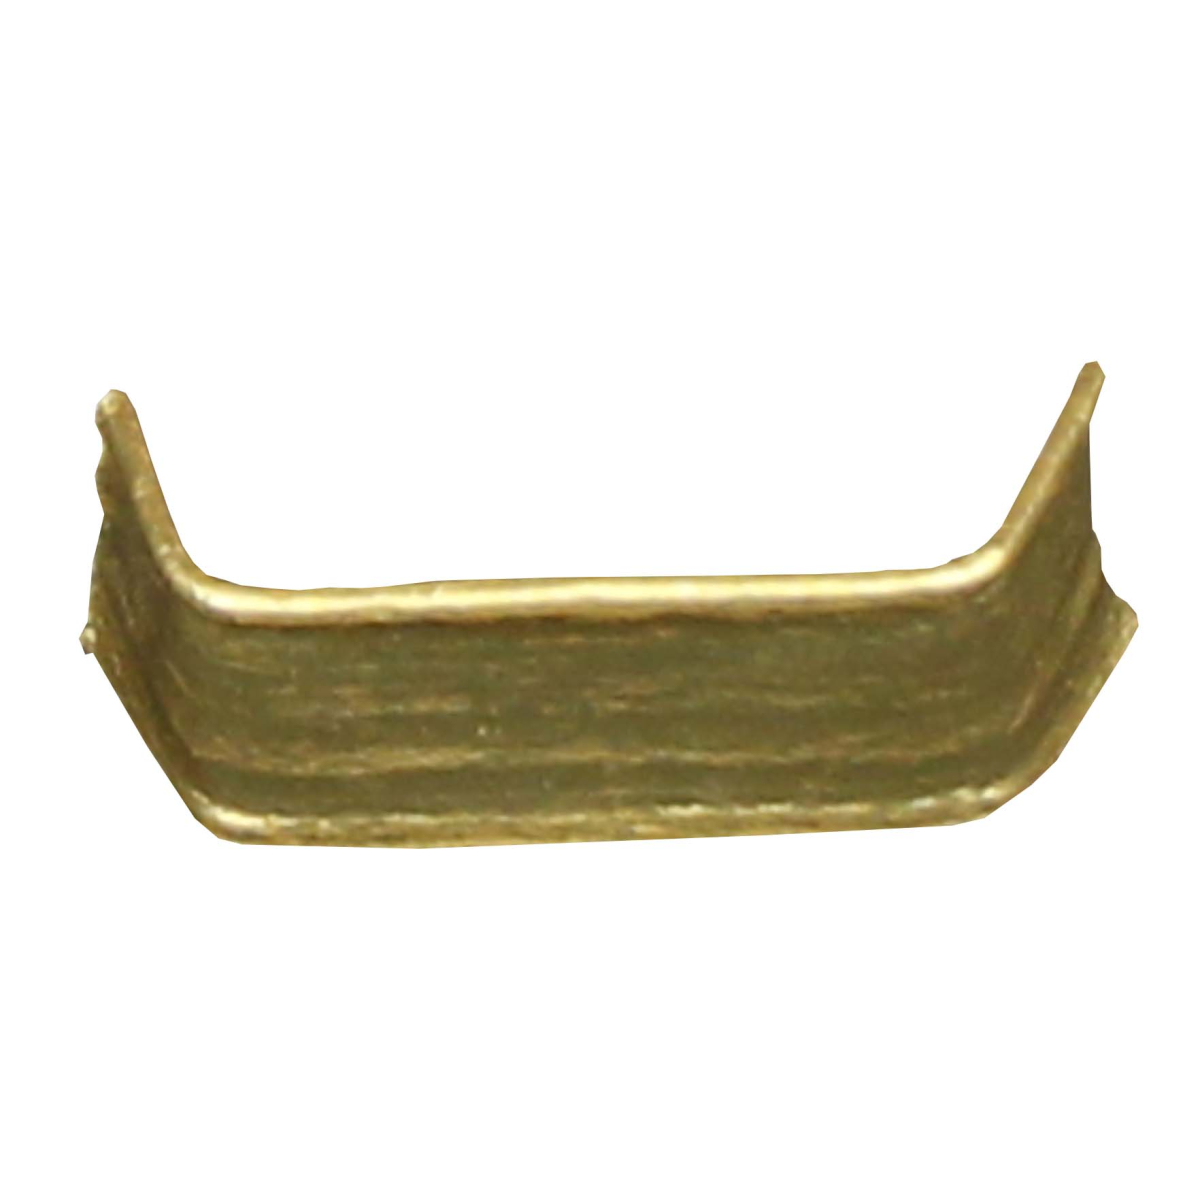 CLIPSE vorgebogen in  u-Form | gold
33 mm x 8 mm / 2-Draht 0,50 mm